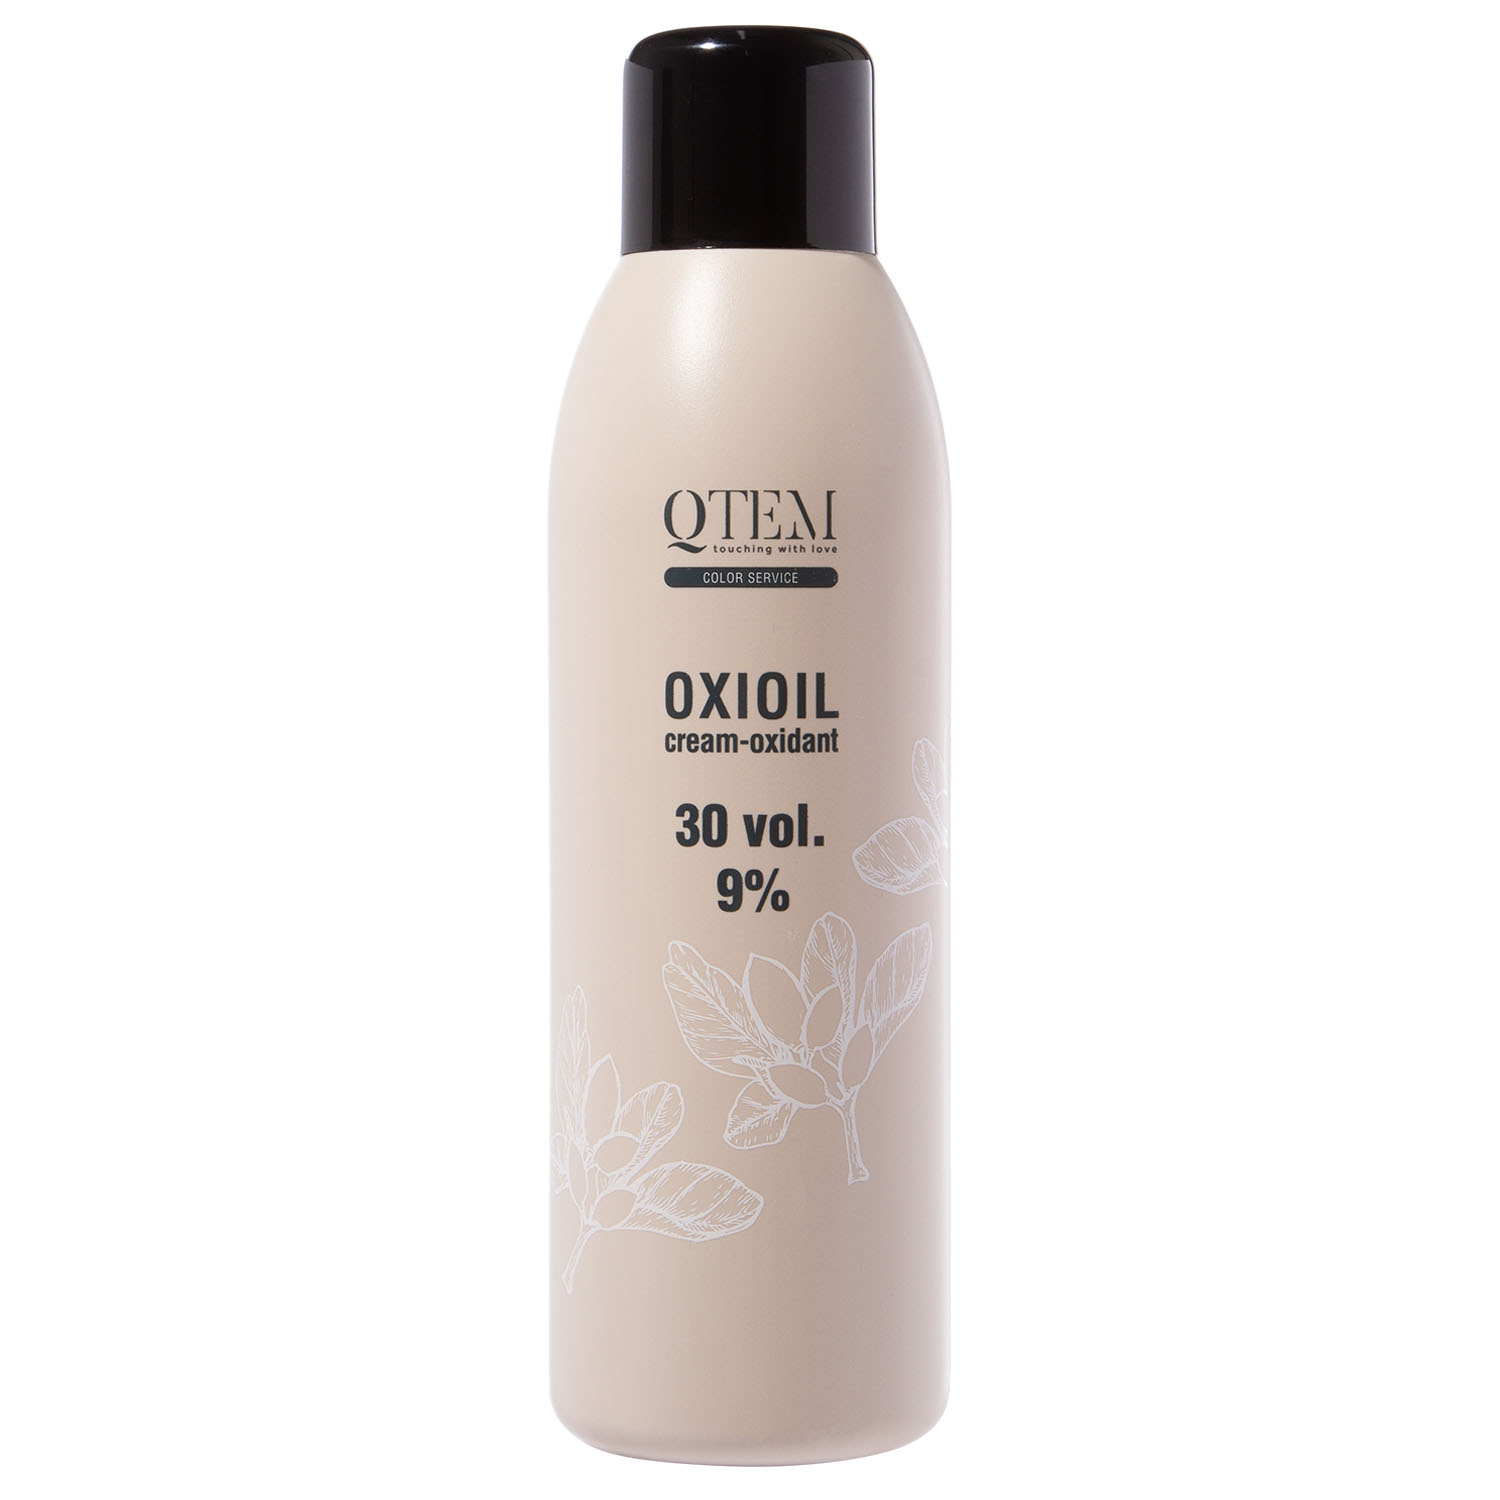 Qtem Универсальный крем-оксидант Oxioil 9% (30 Vol.), 1000 мл (Qtem, Color Service) универсальный крем оксидант qtem oxioil 9% 30 vol 1000 мл